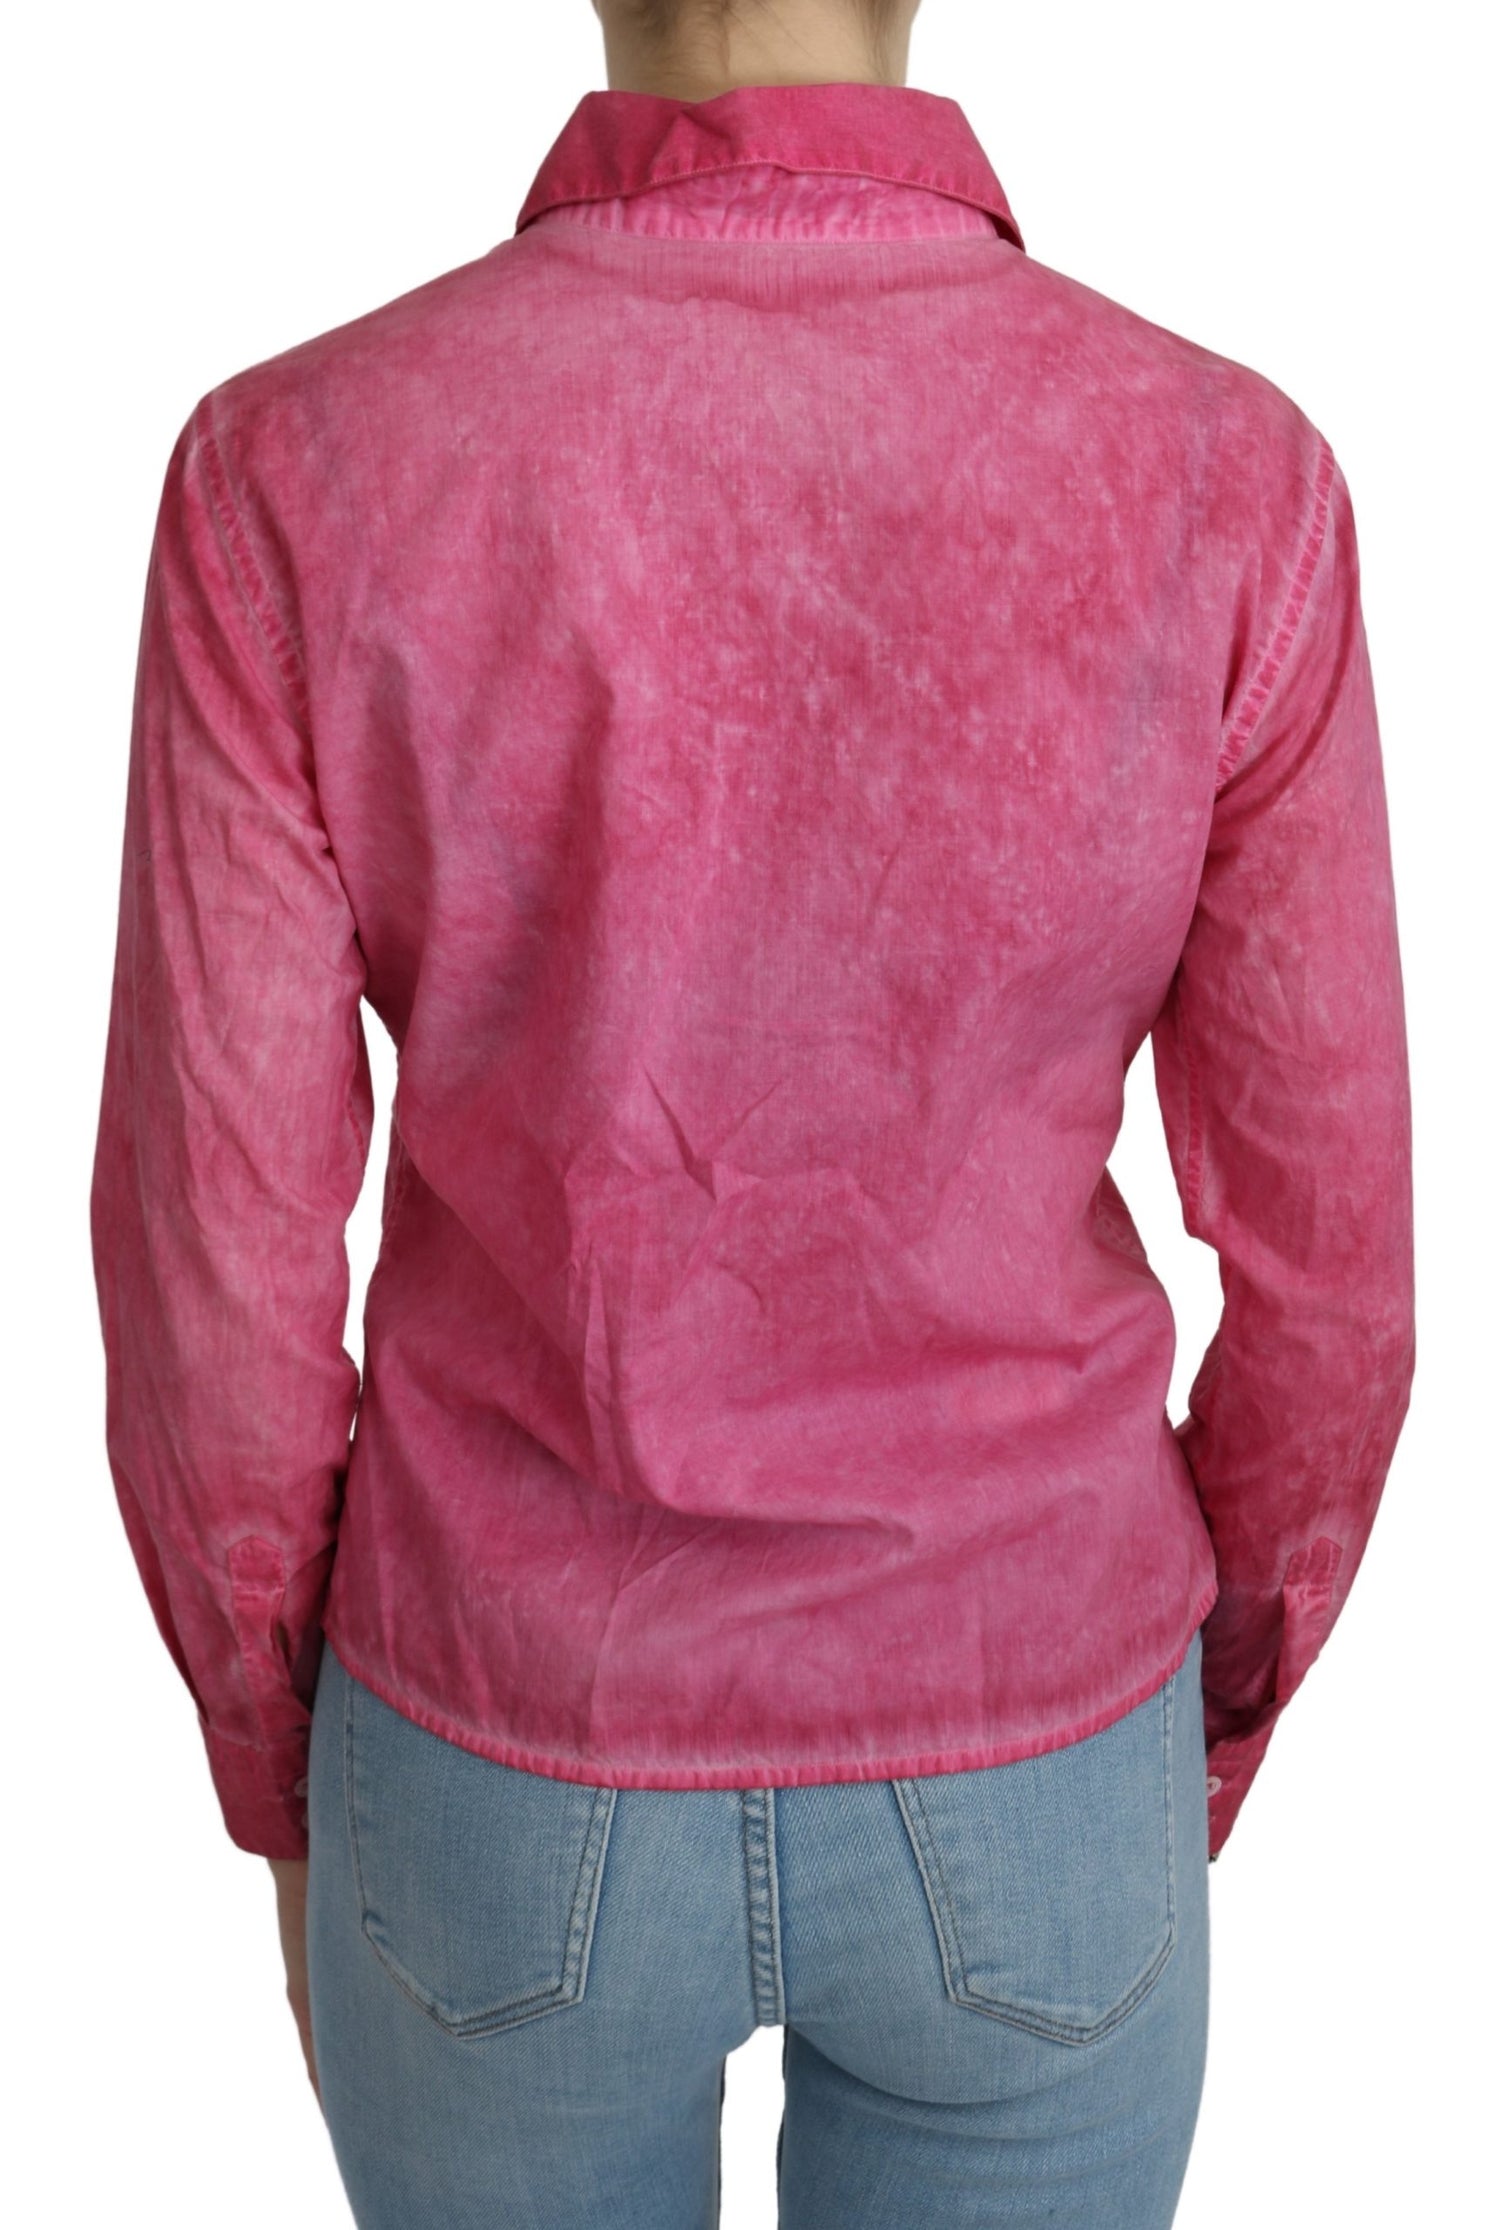 Pink Collared Long Sleeve Shirt Blouse Top